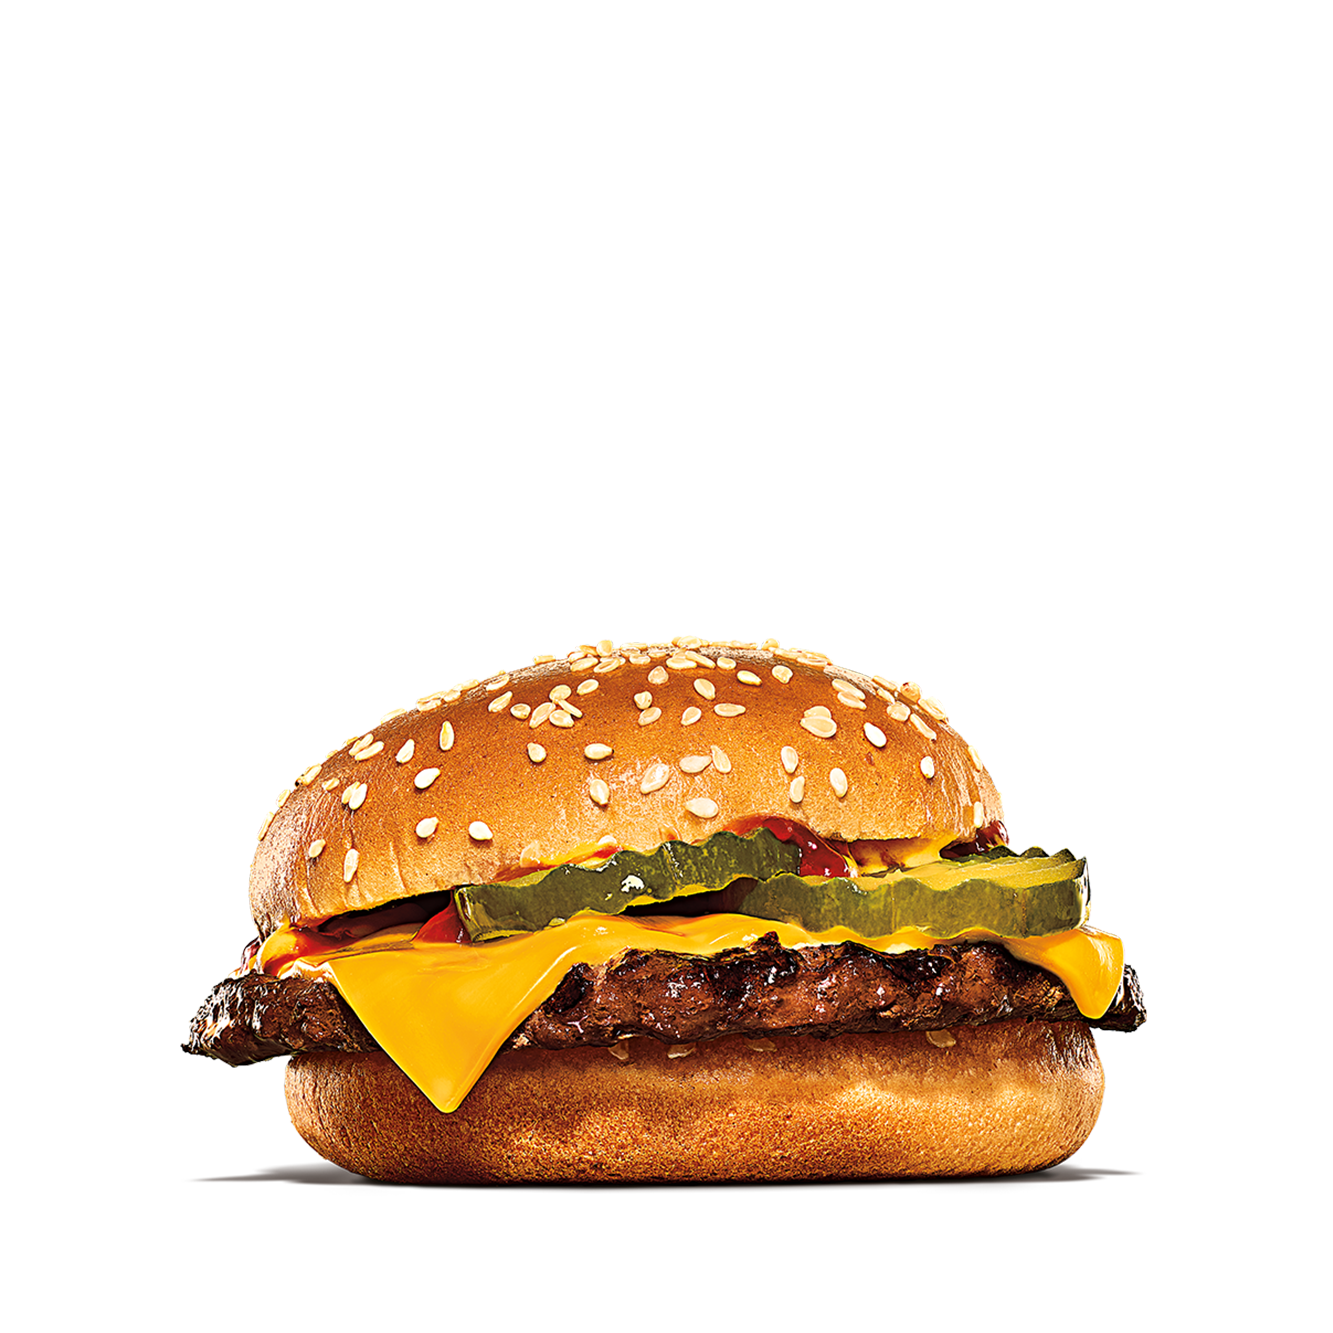 Calories in Burger King Cheeseburger